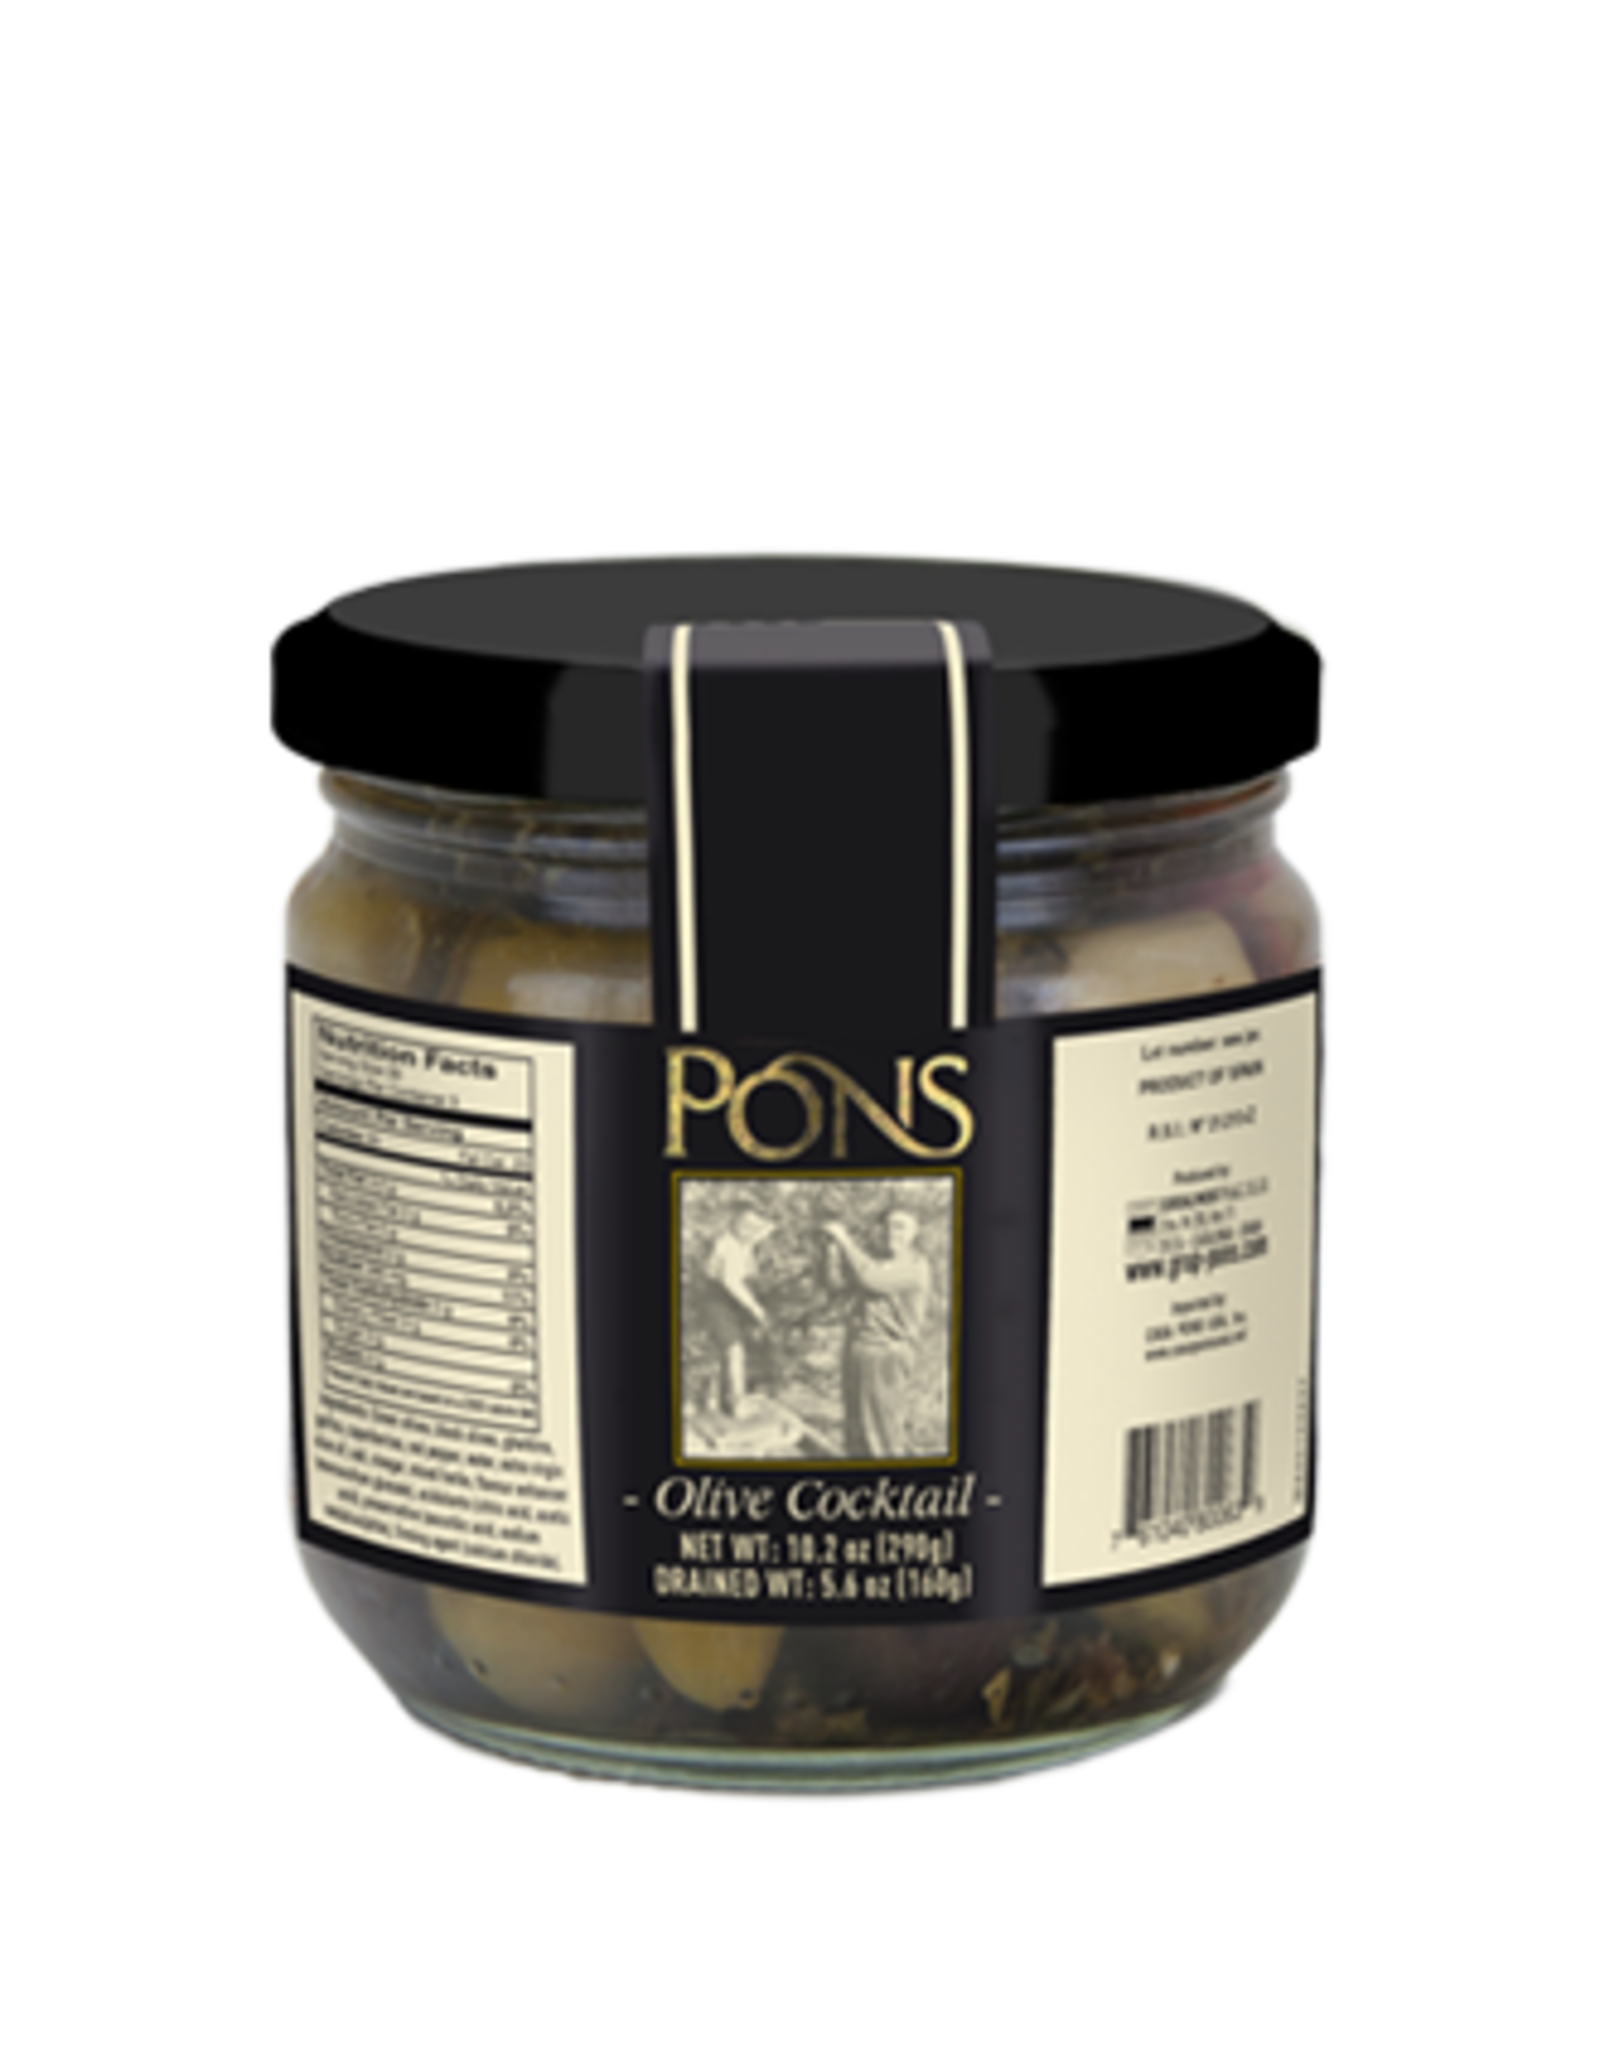 Pons Pons Olive Cocktail